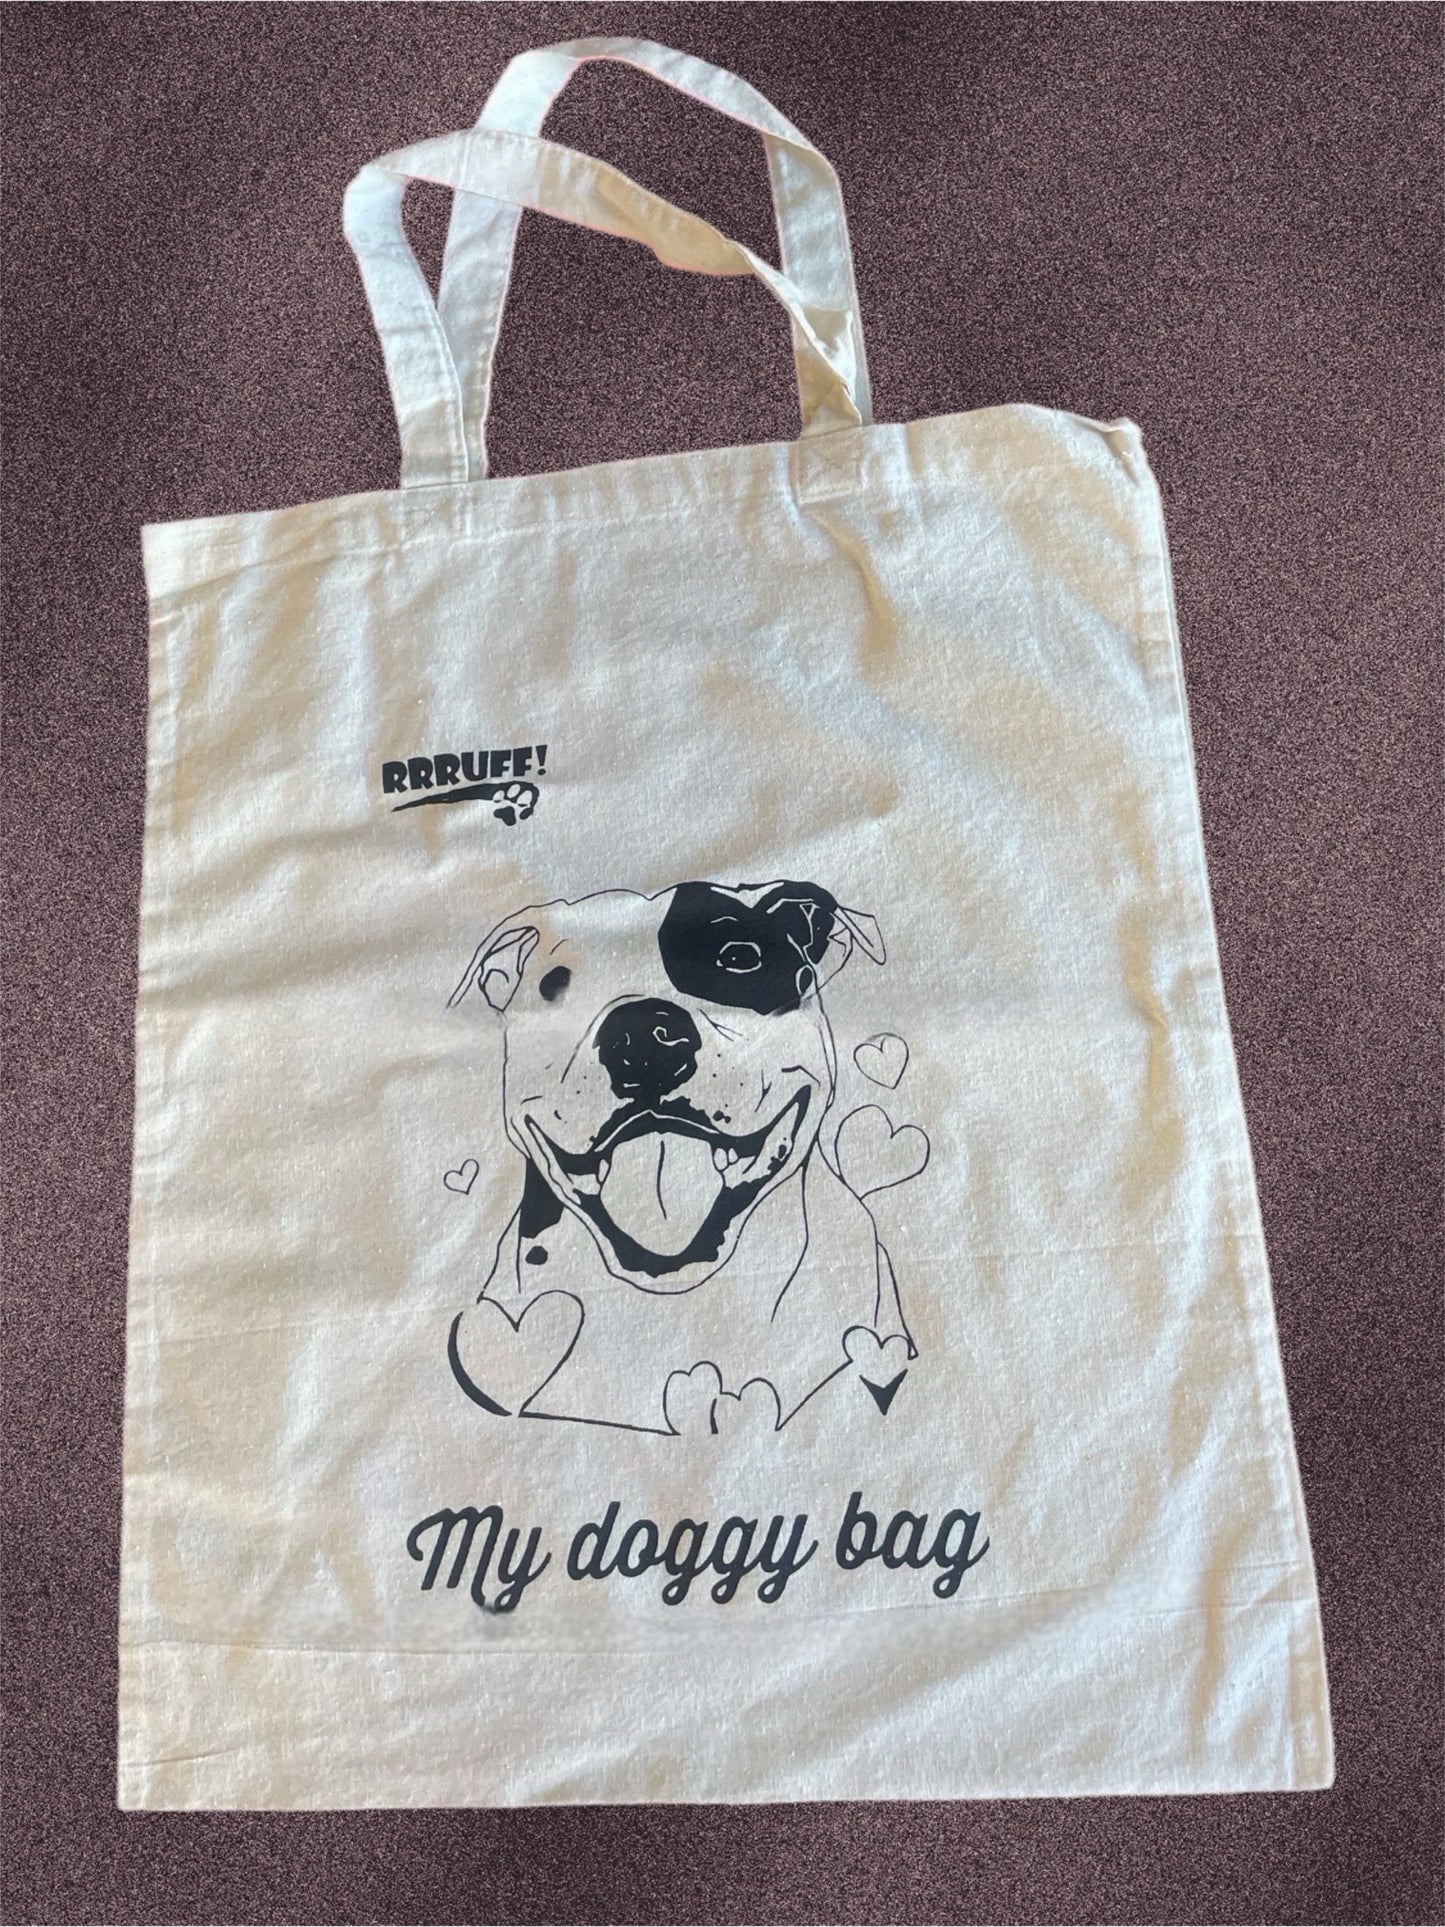 Calico tote bag staffy amstaff book bag shopping bag puppy doggy bag birthday gift